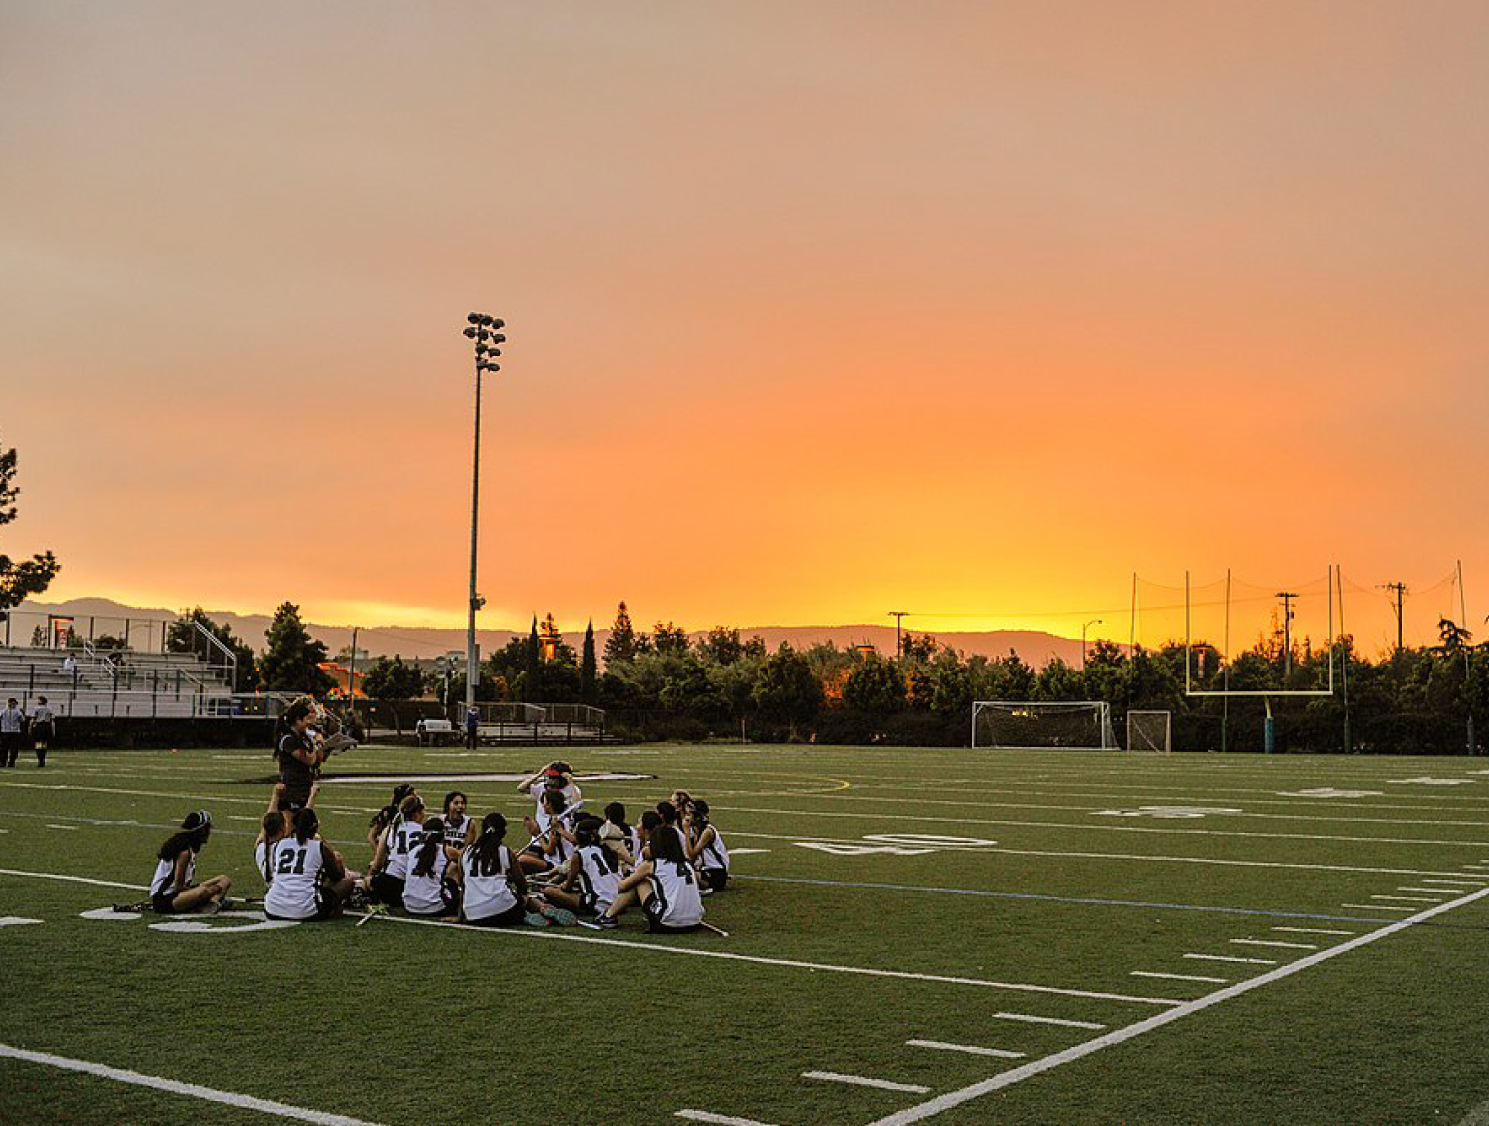 Student athletes sit on artificial turf football field at sunrise